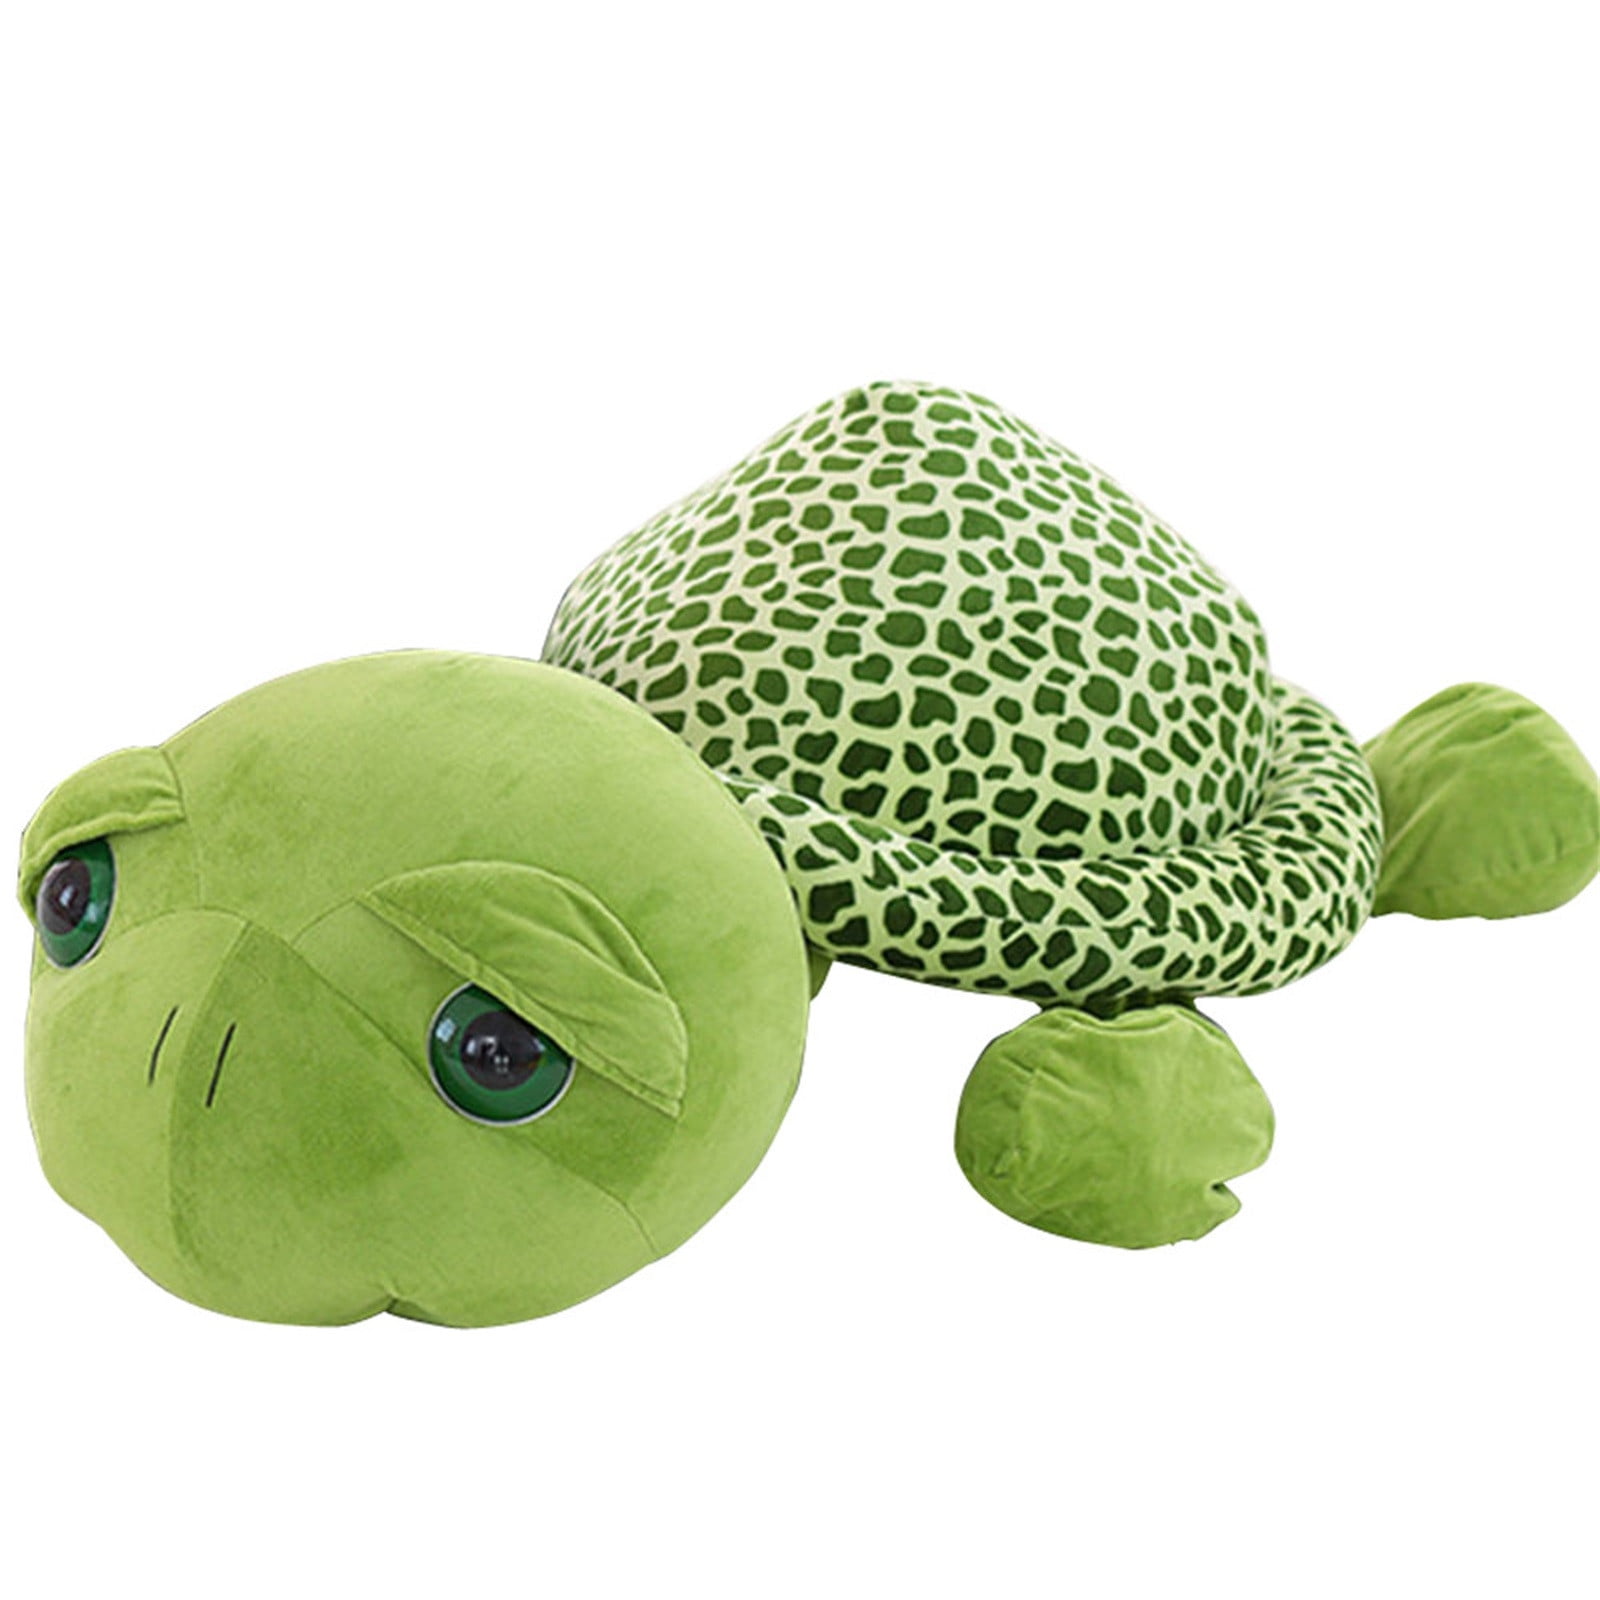 Baby Toy Big Eyes Green Tortoise Sea Turtle Stuffed Plush Doll Animal Toy SE 